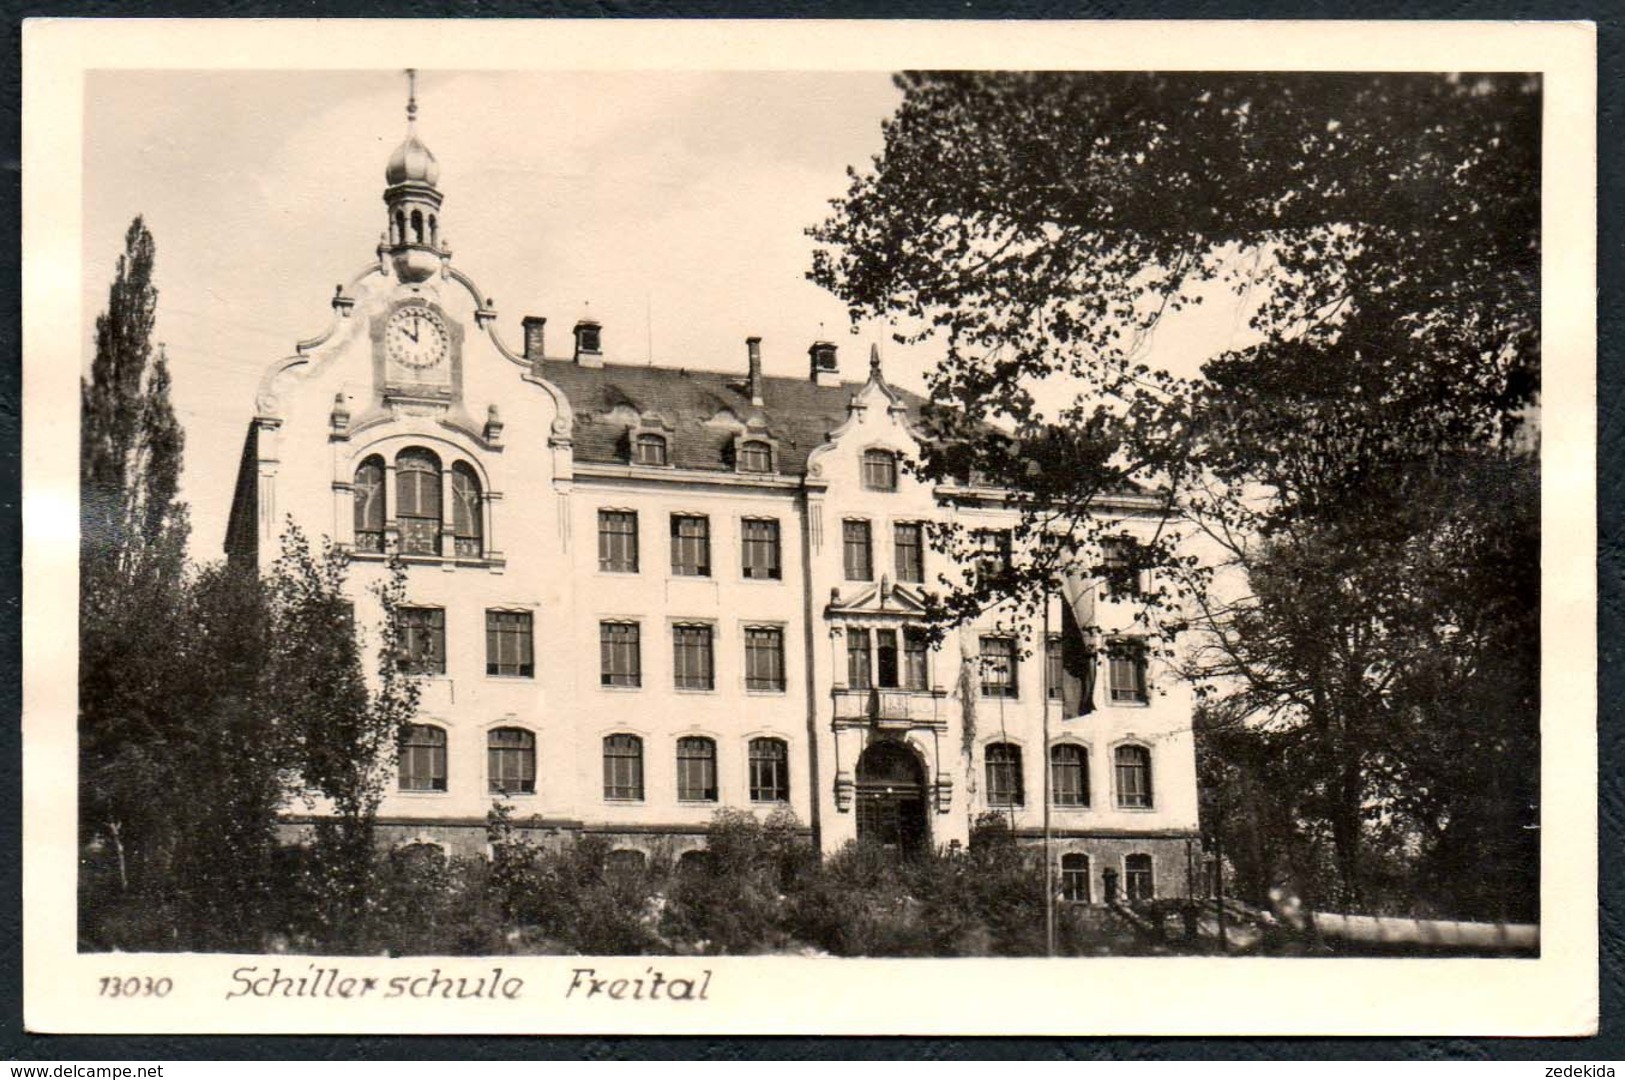 D8147 - Freital Schillerschule Schule - Jubiläumskarte 50 Jahre - Freital